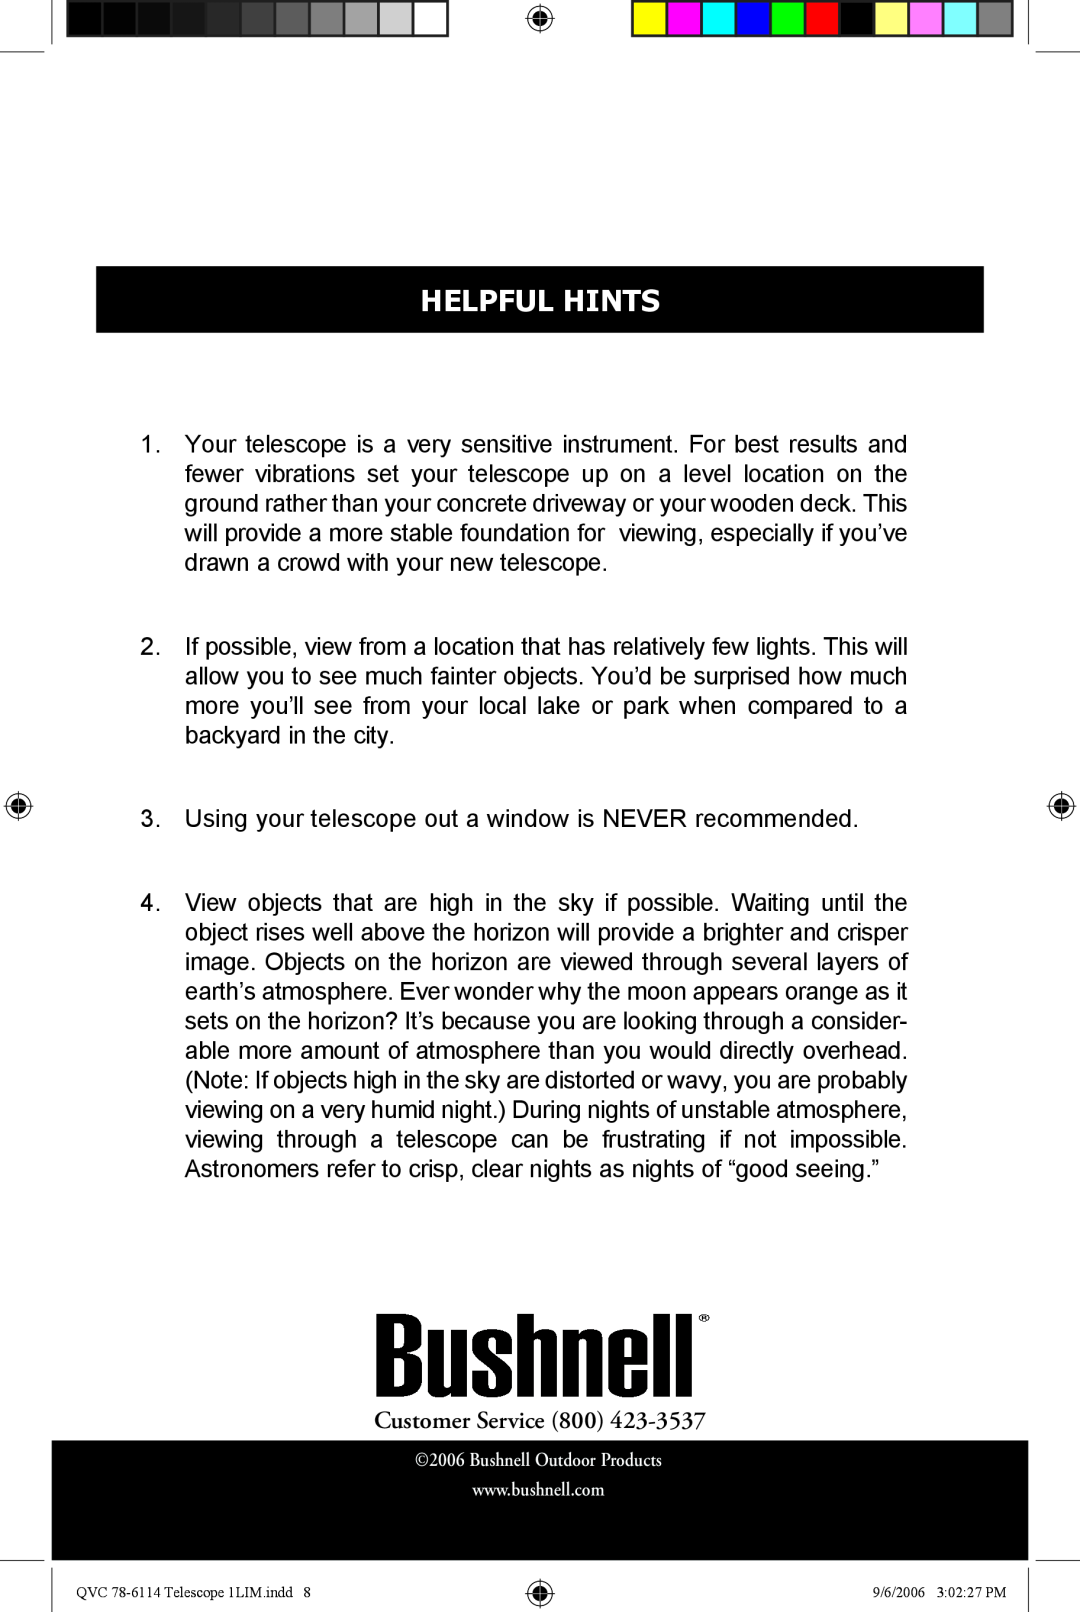 Bushnell 78-6114 instruction manual Helpful Hints, Customer Service 